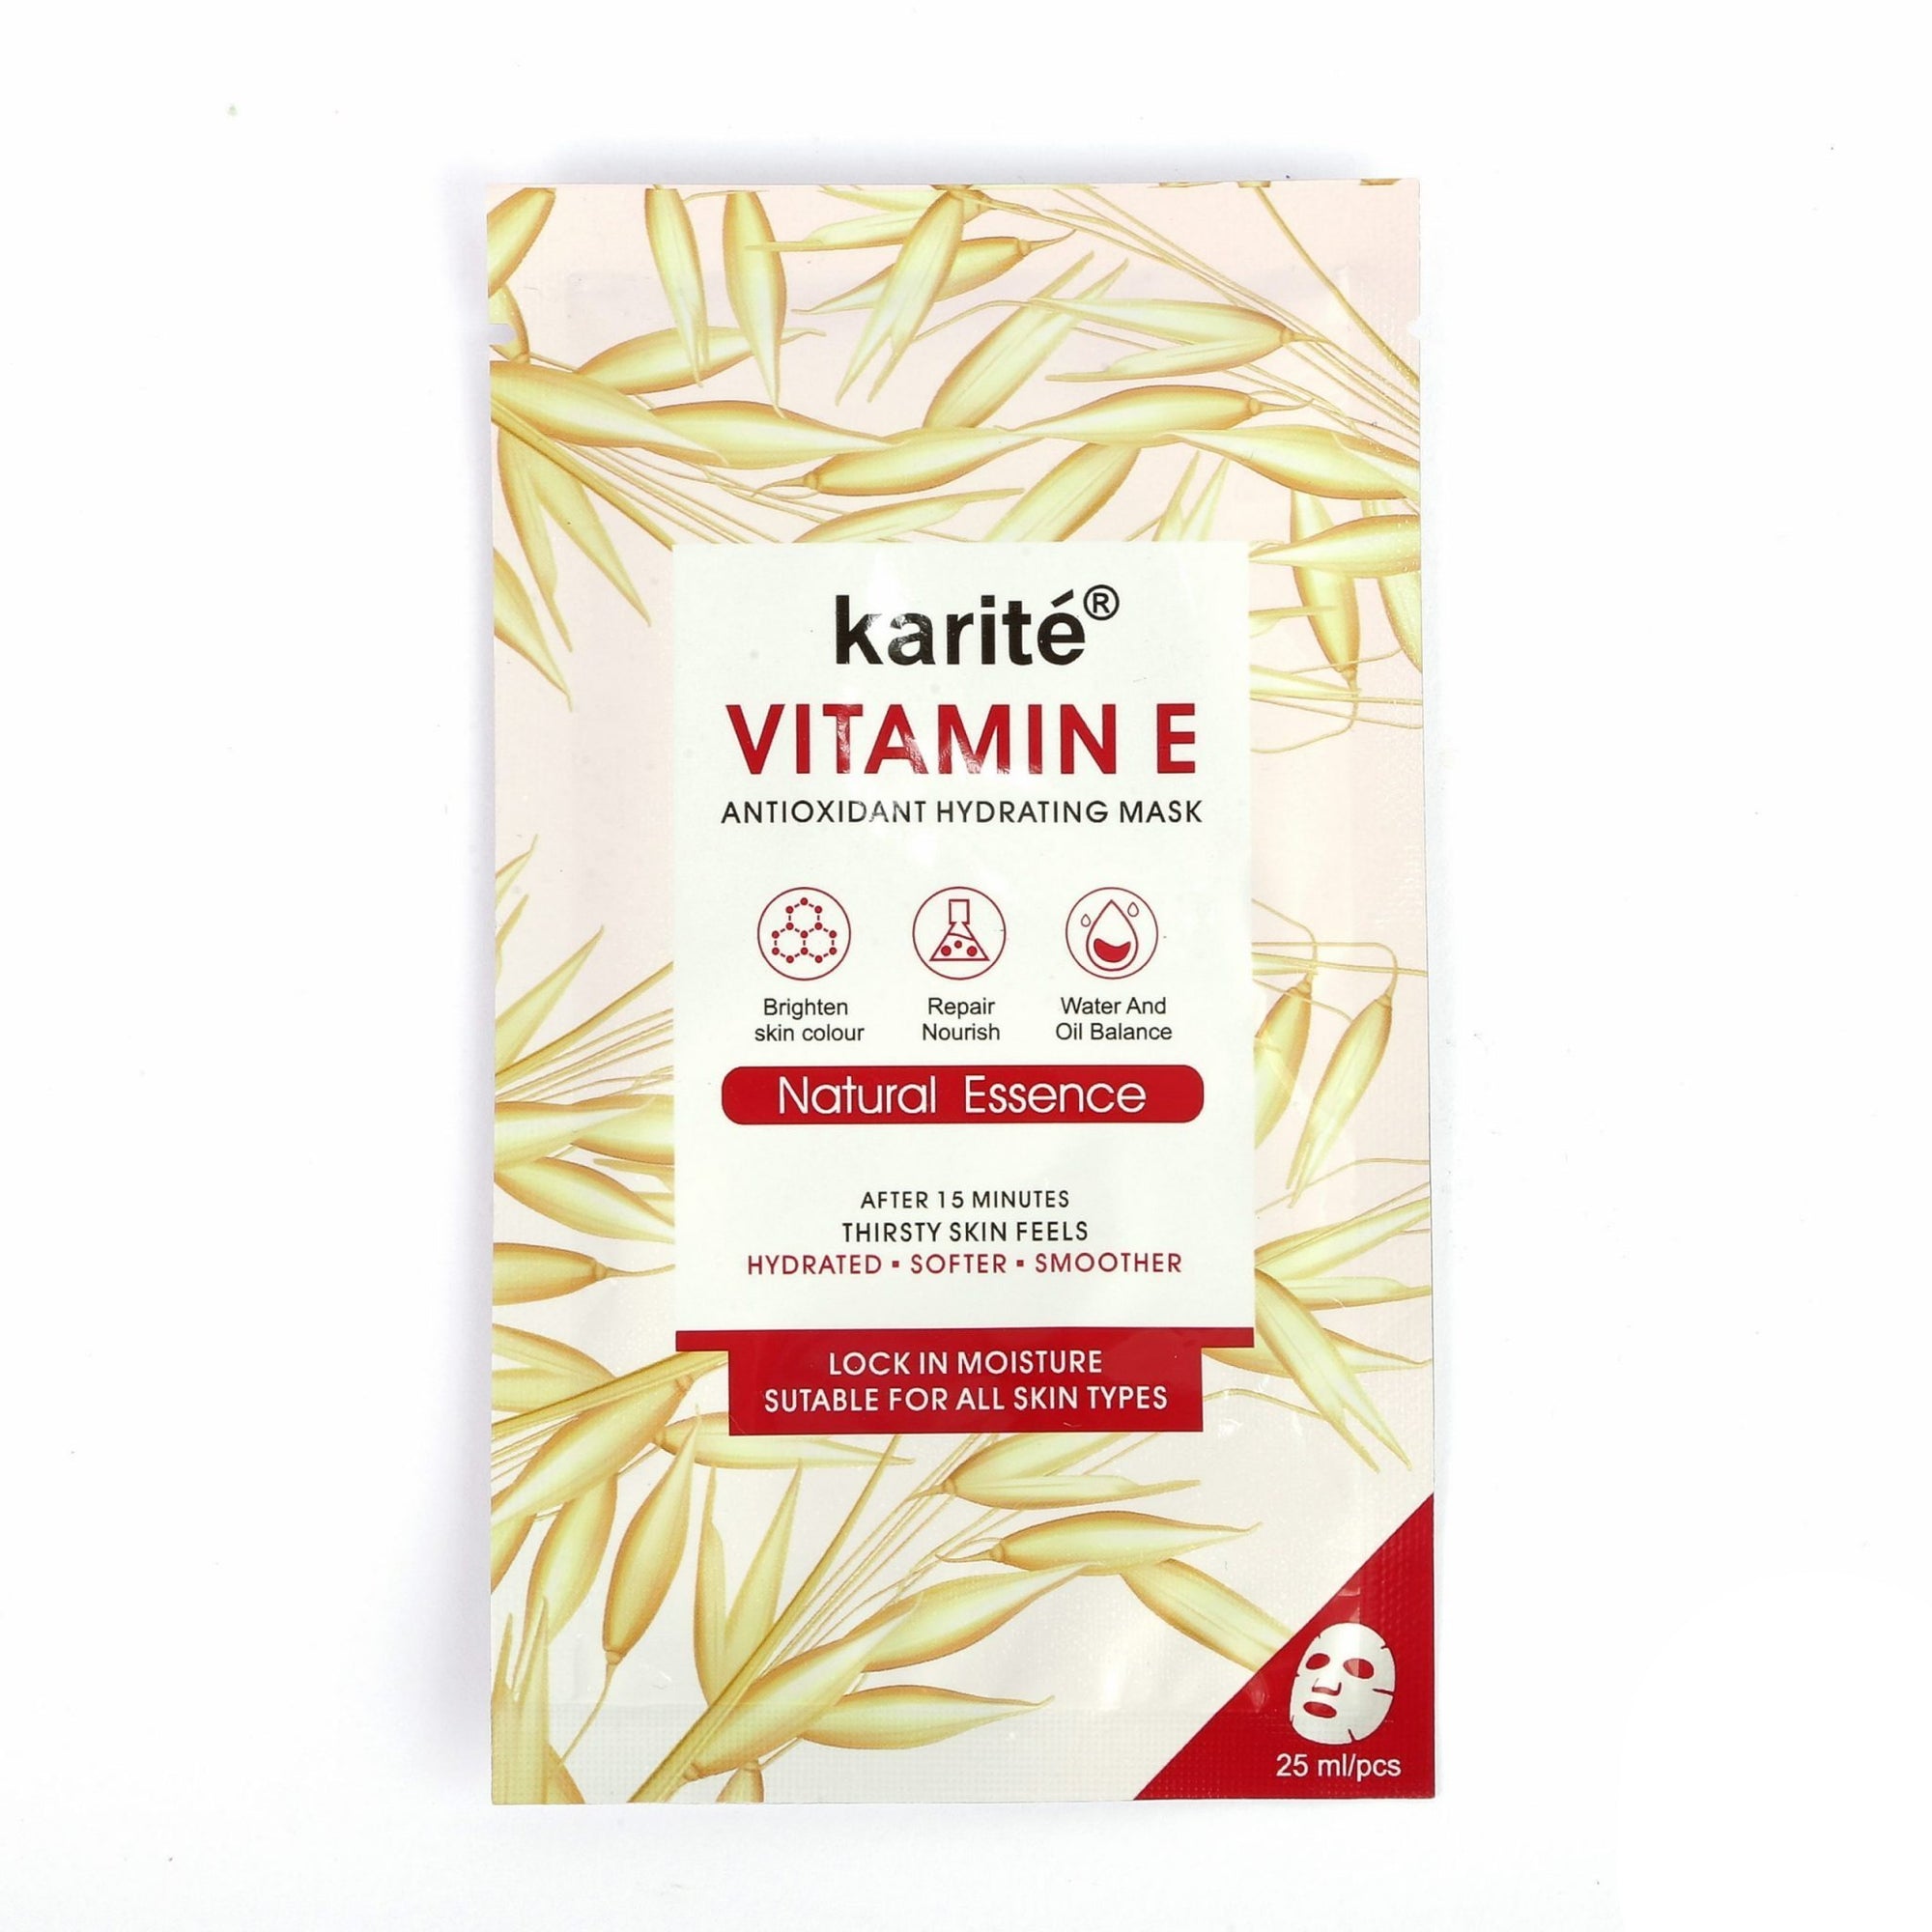 Karite Vitamin E Antioxidant Hydrating Mask freeshipping - lasertag.pk